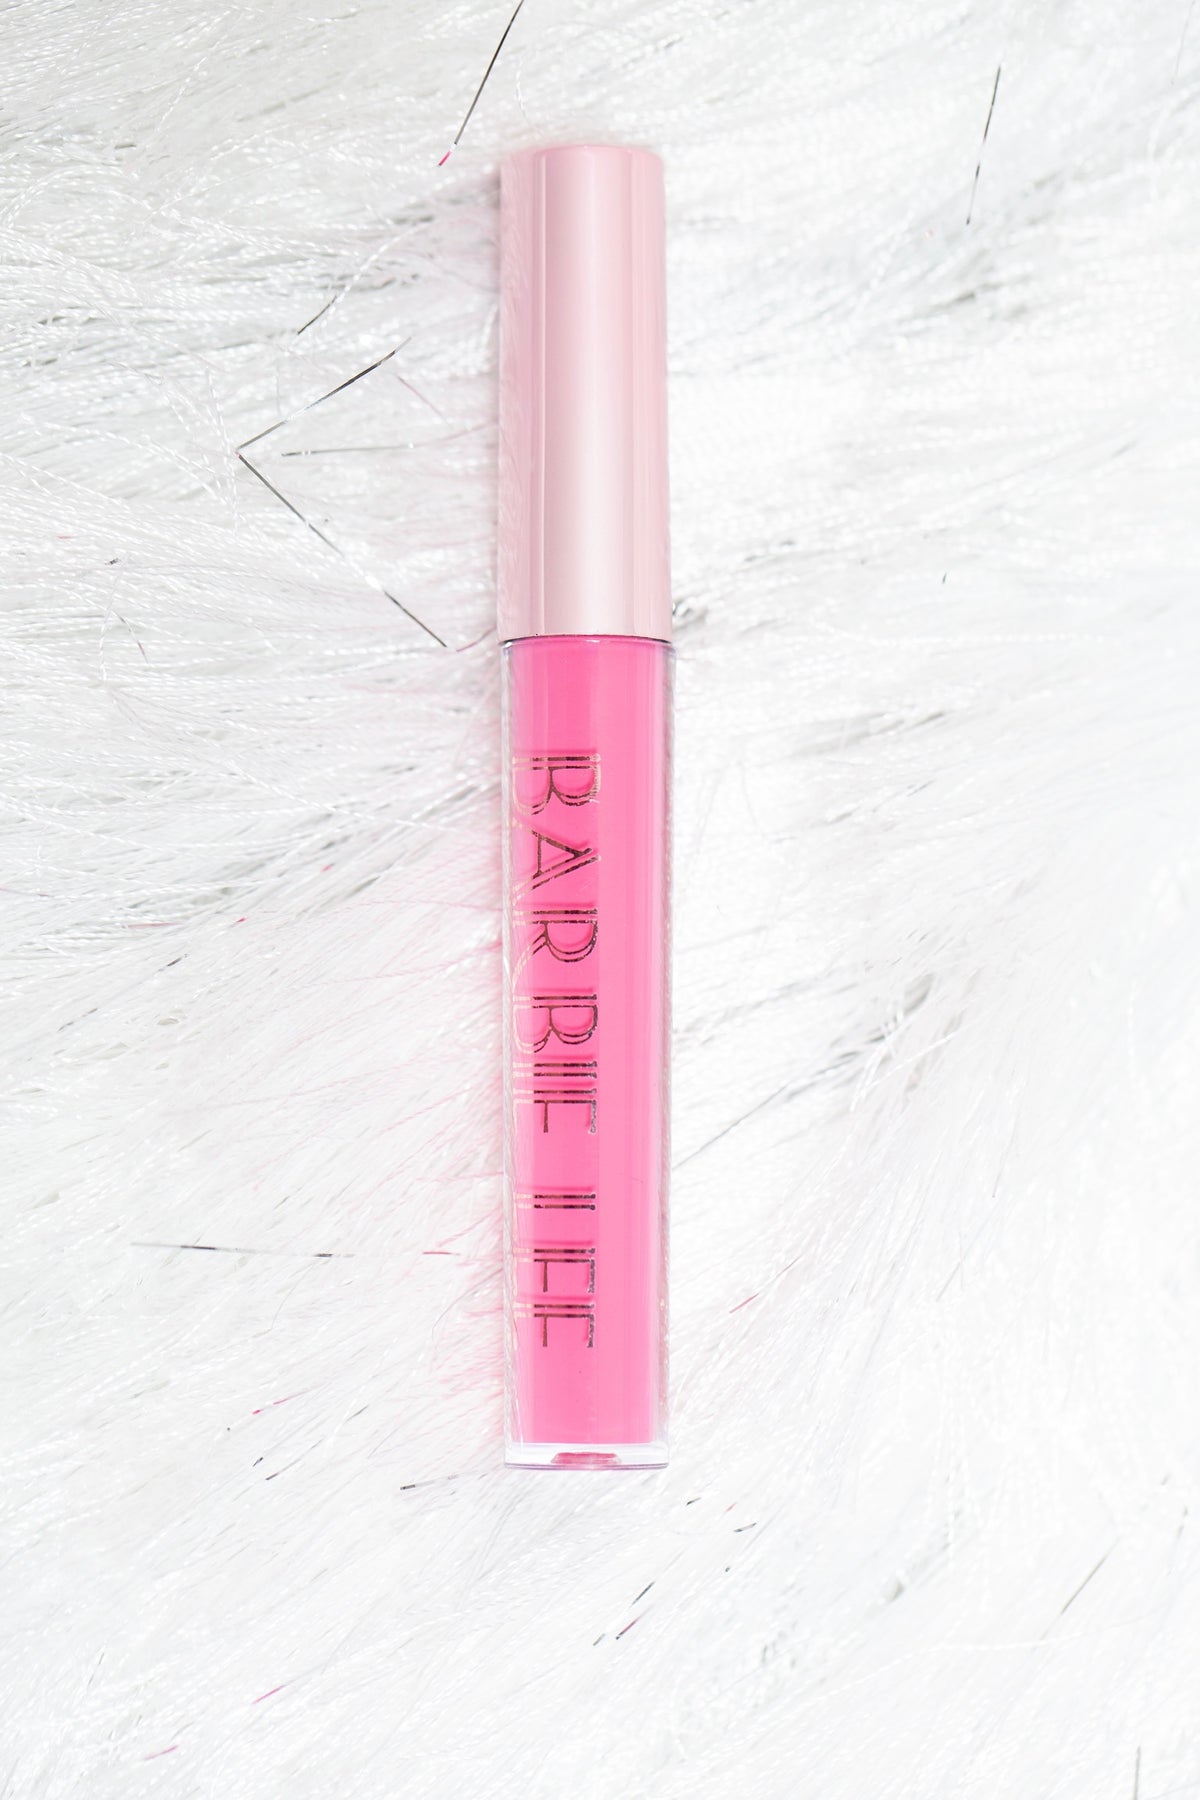 Barbie Pink Lip Gloss